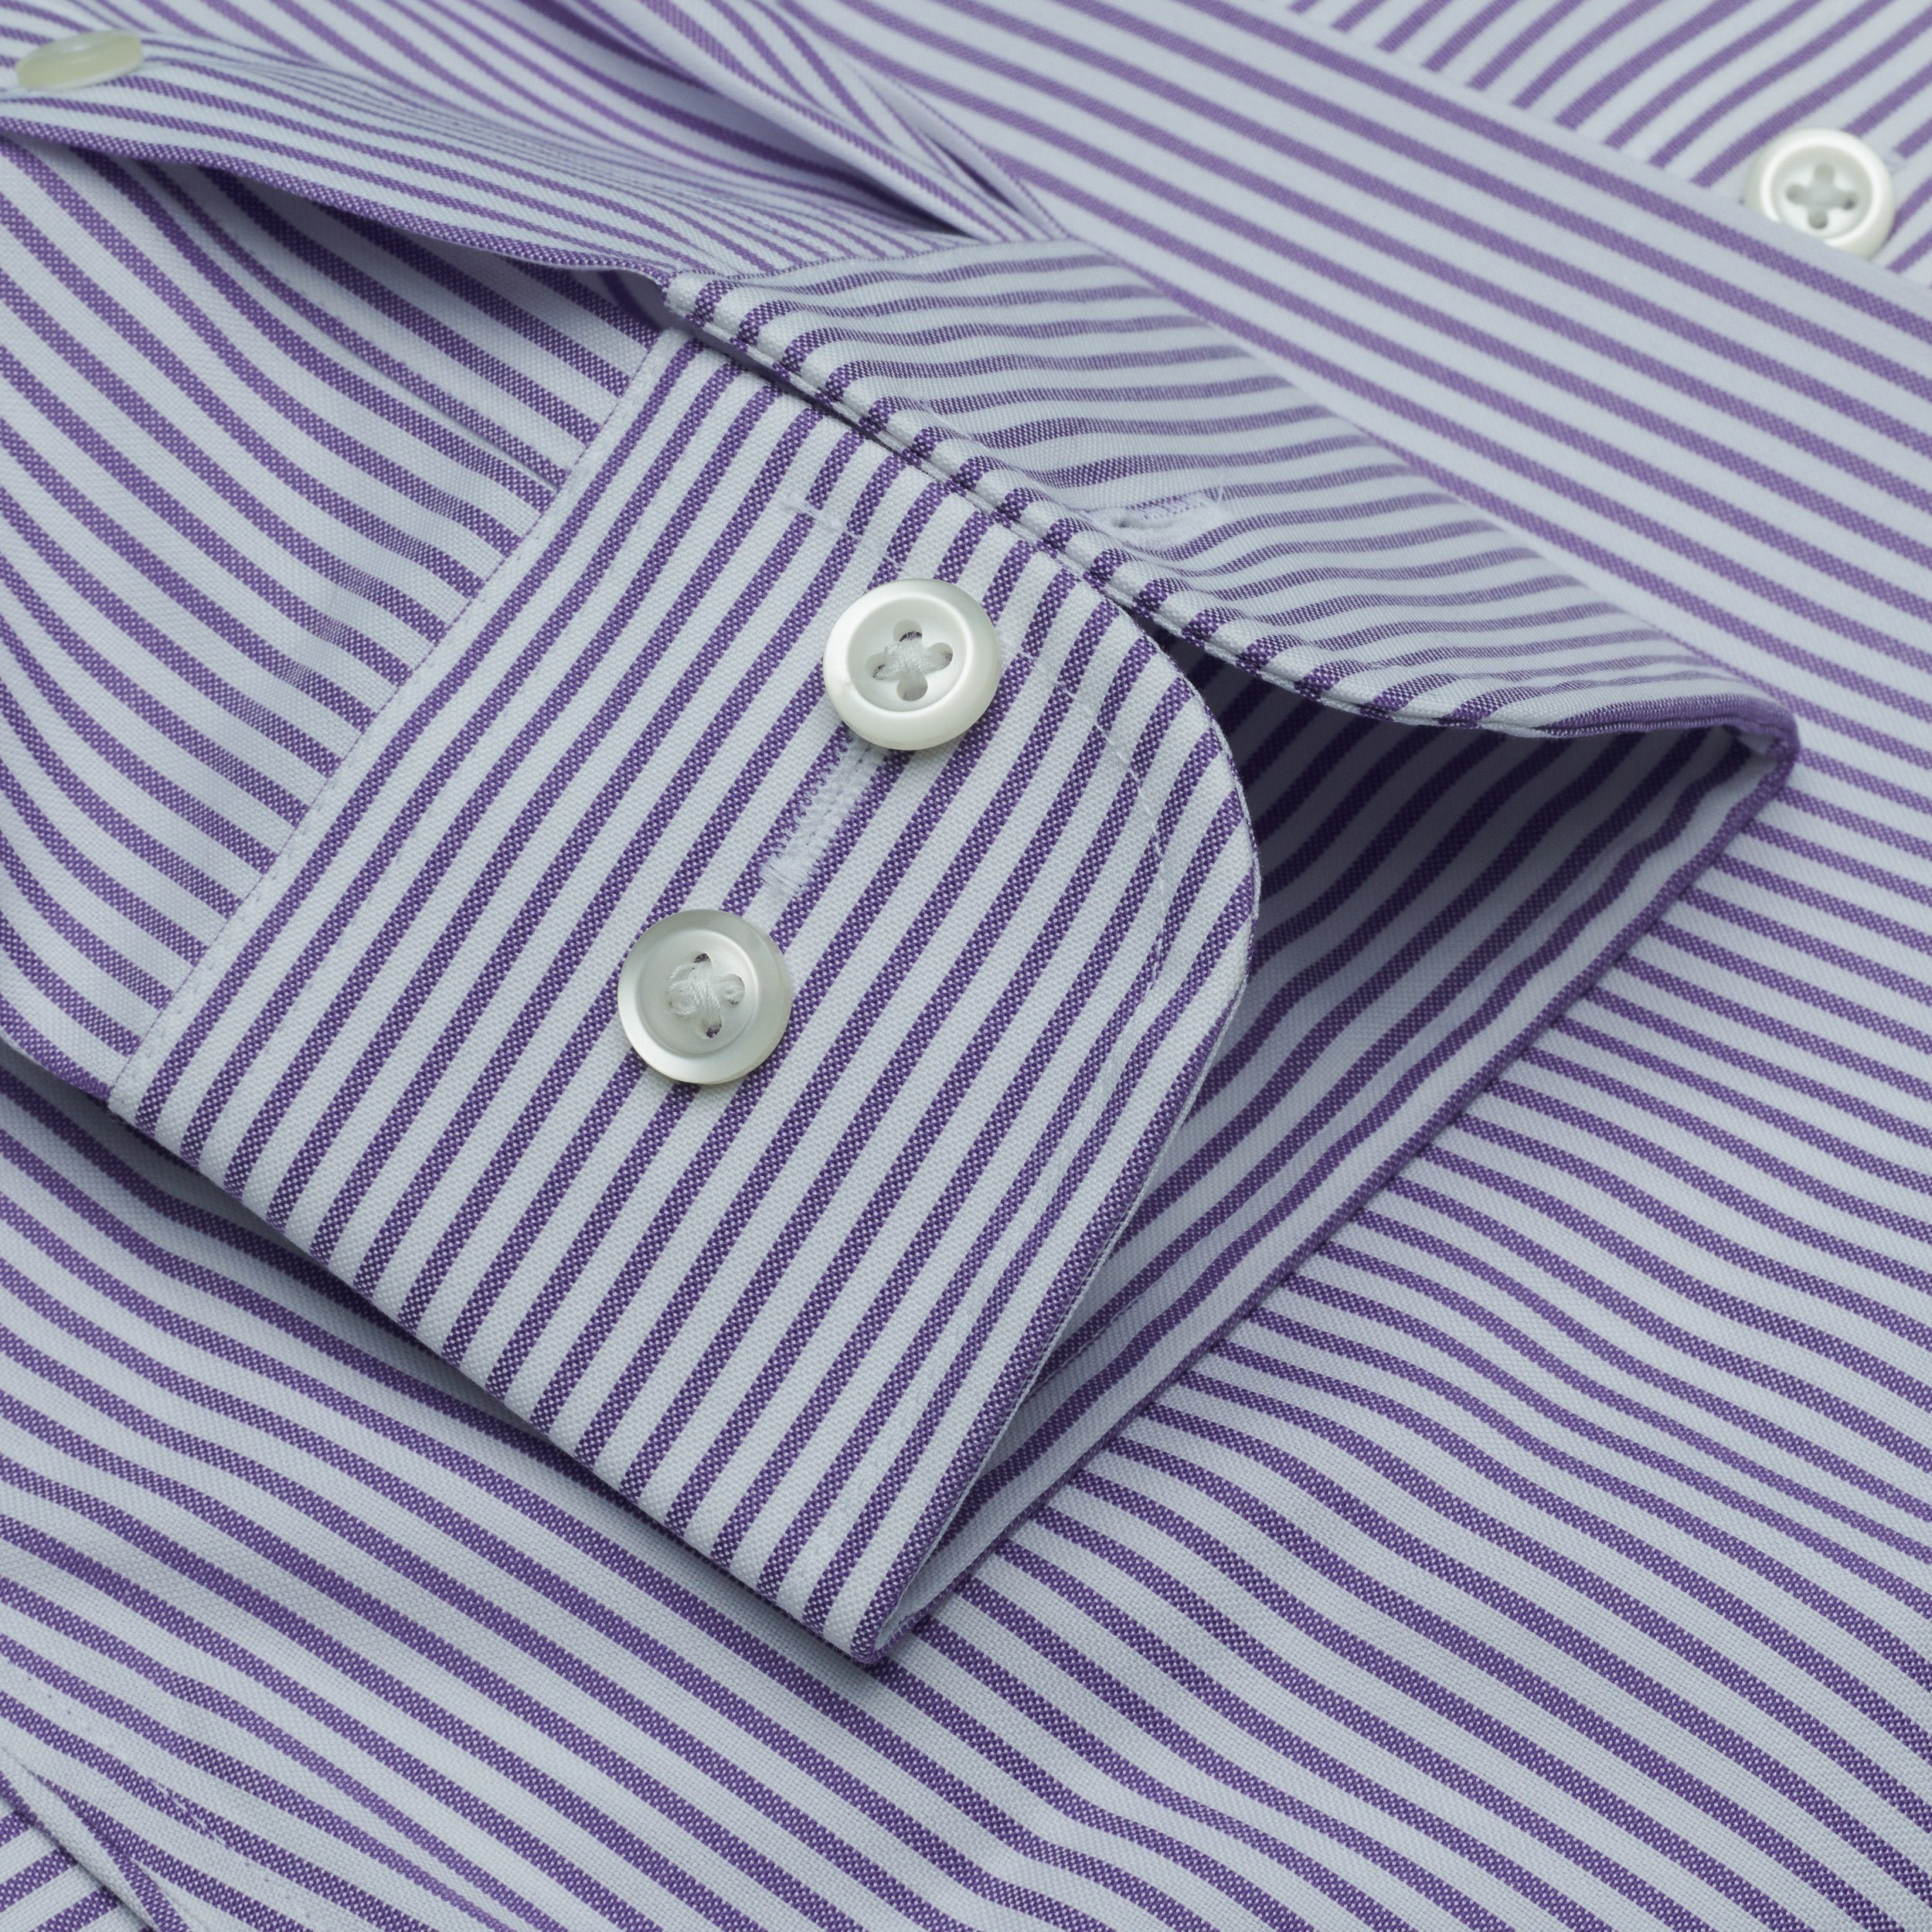 074 - Lavender Bankers Stripe SC Dress Shirt Cooper and Stewart 